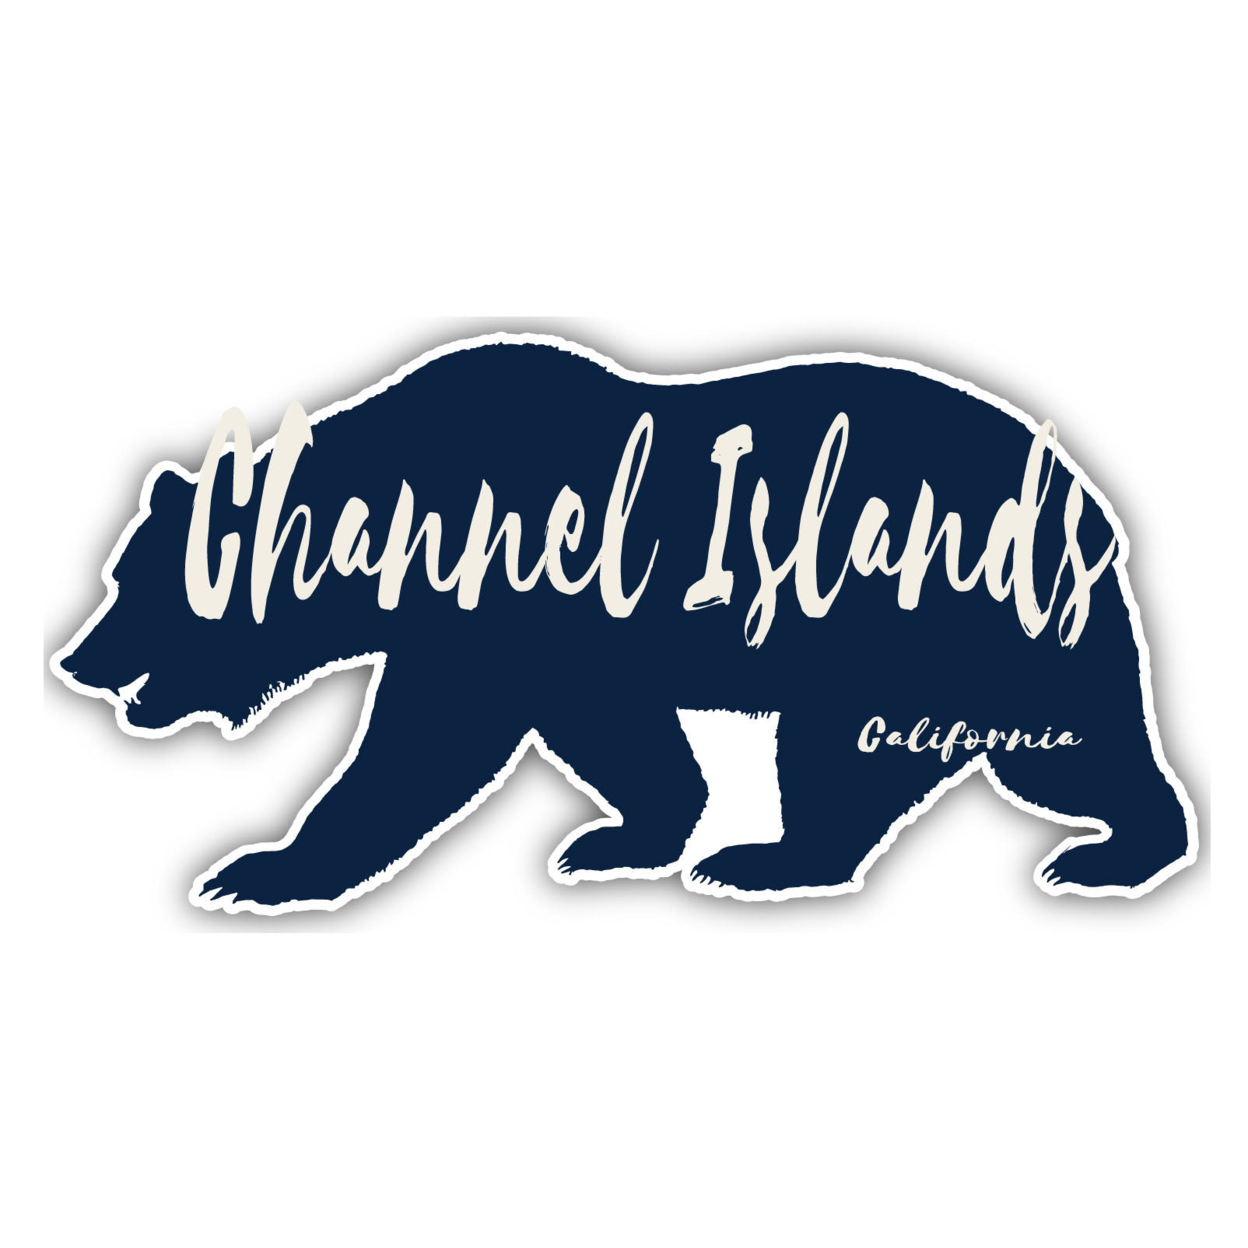 Channel Islands California Souvenir Decorative Stickers (Choose Theme And Size) - Single Unit, 12-Inch, Bear